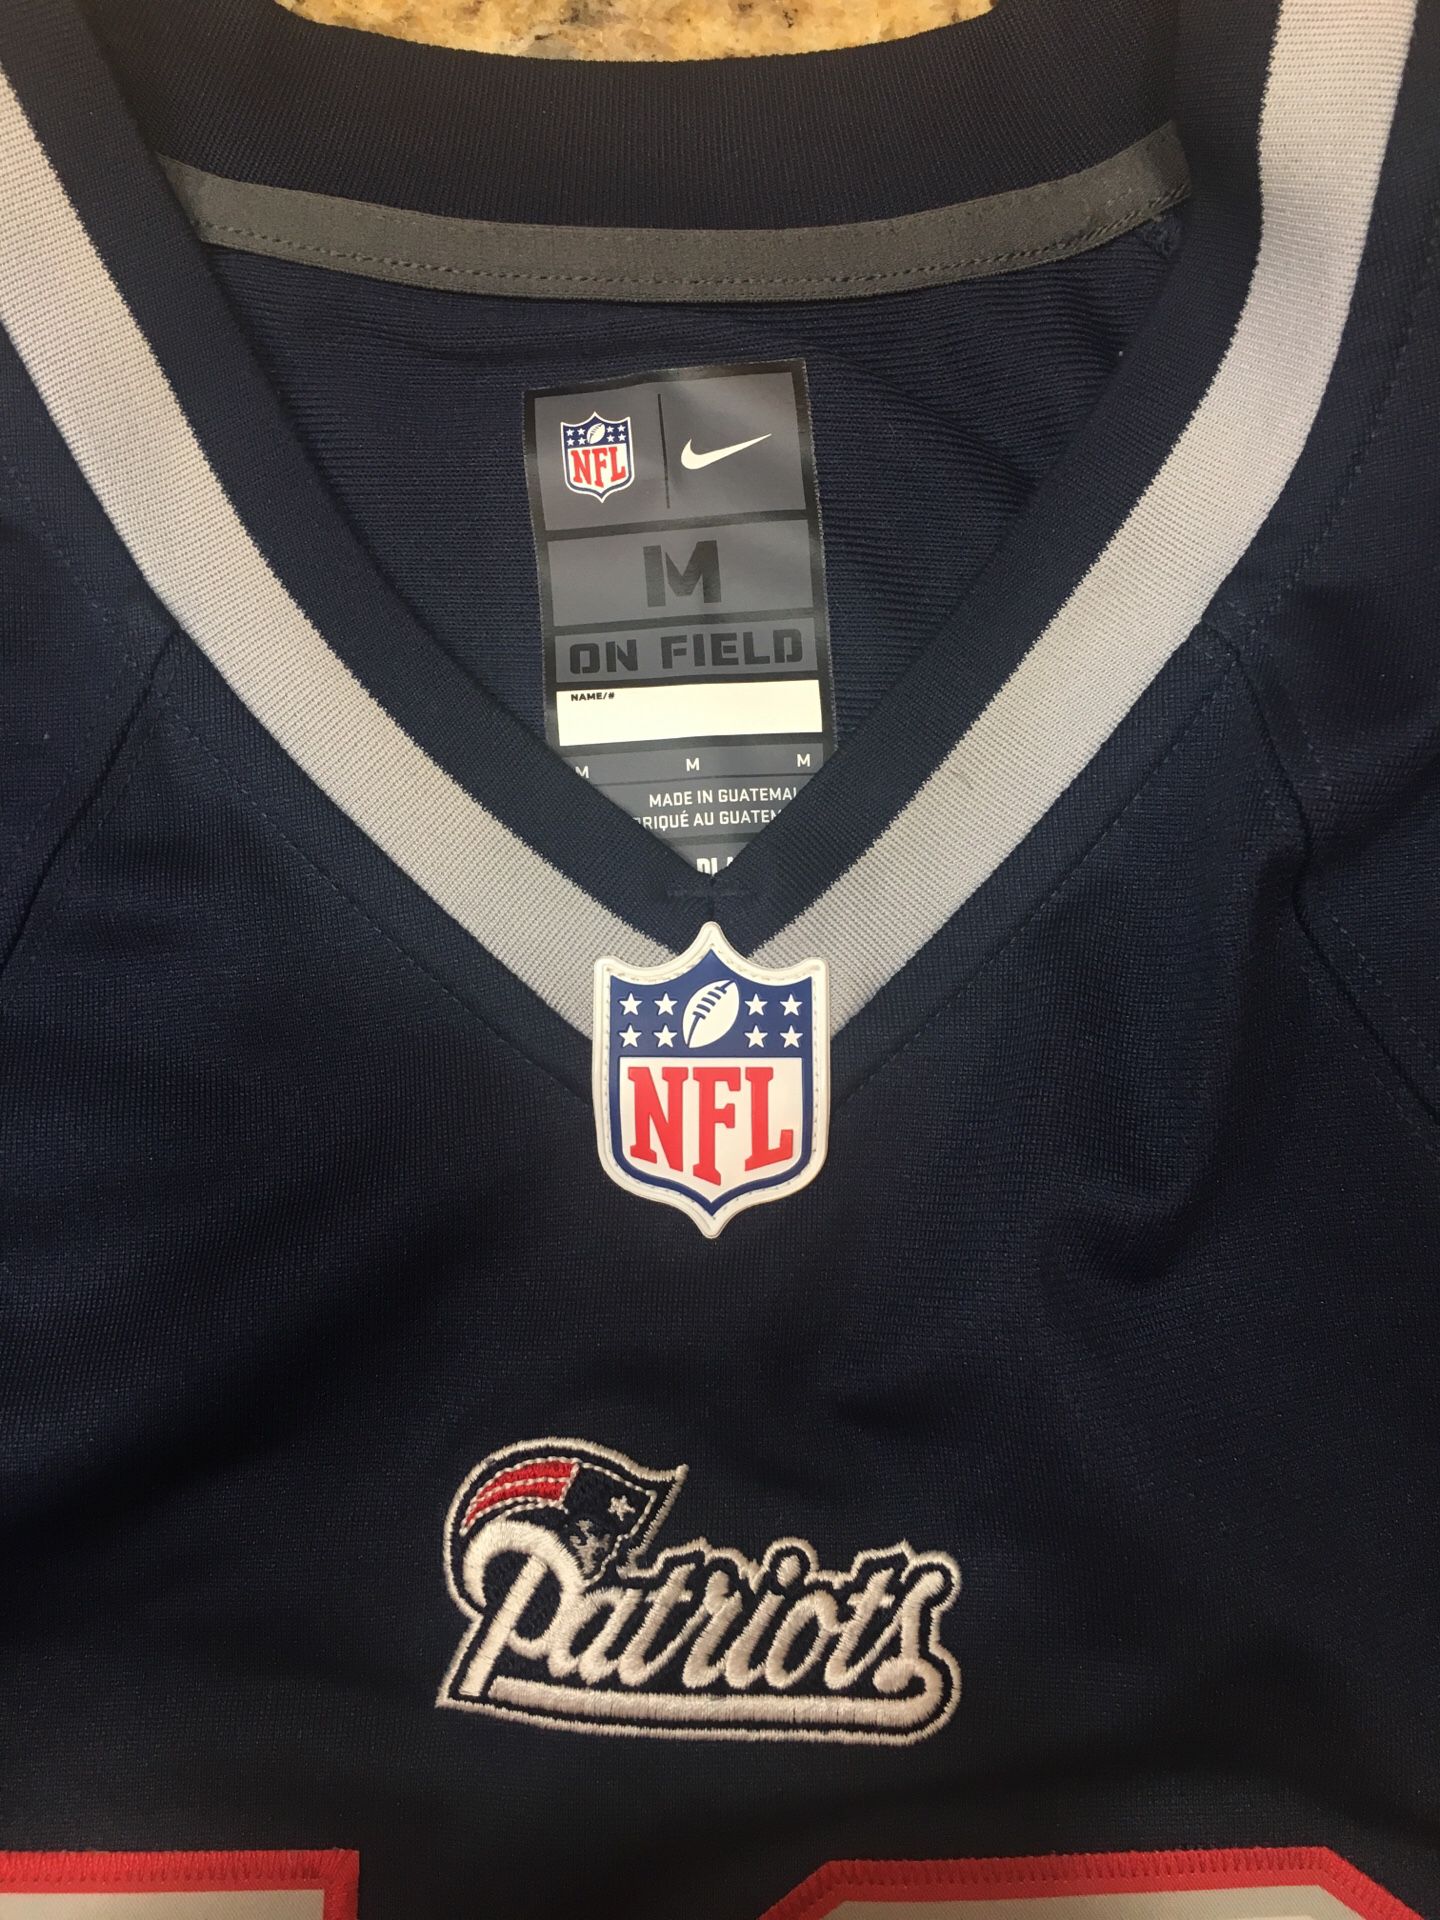 Medium New England Patriots jersey